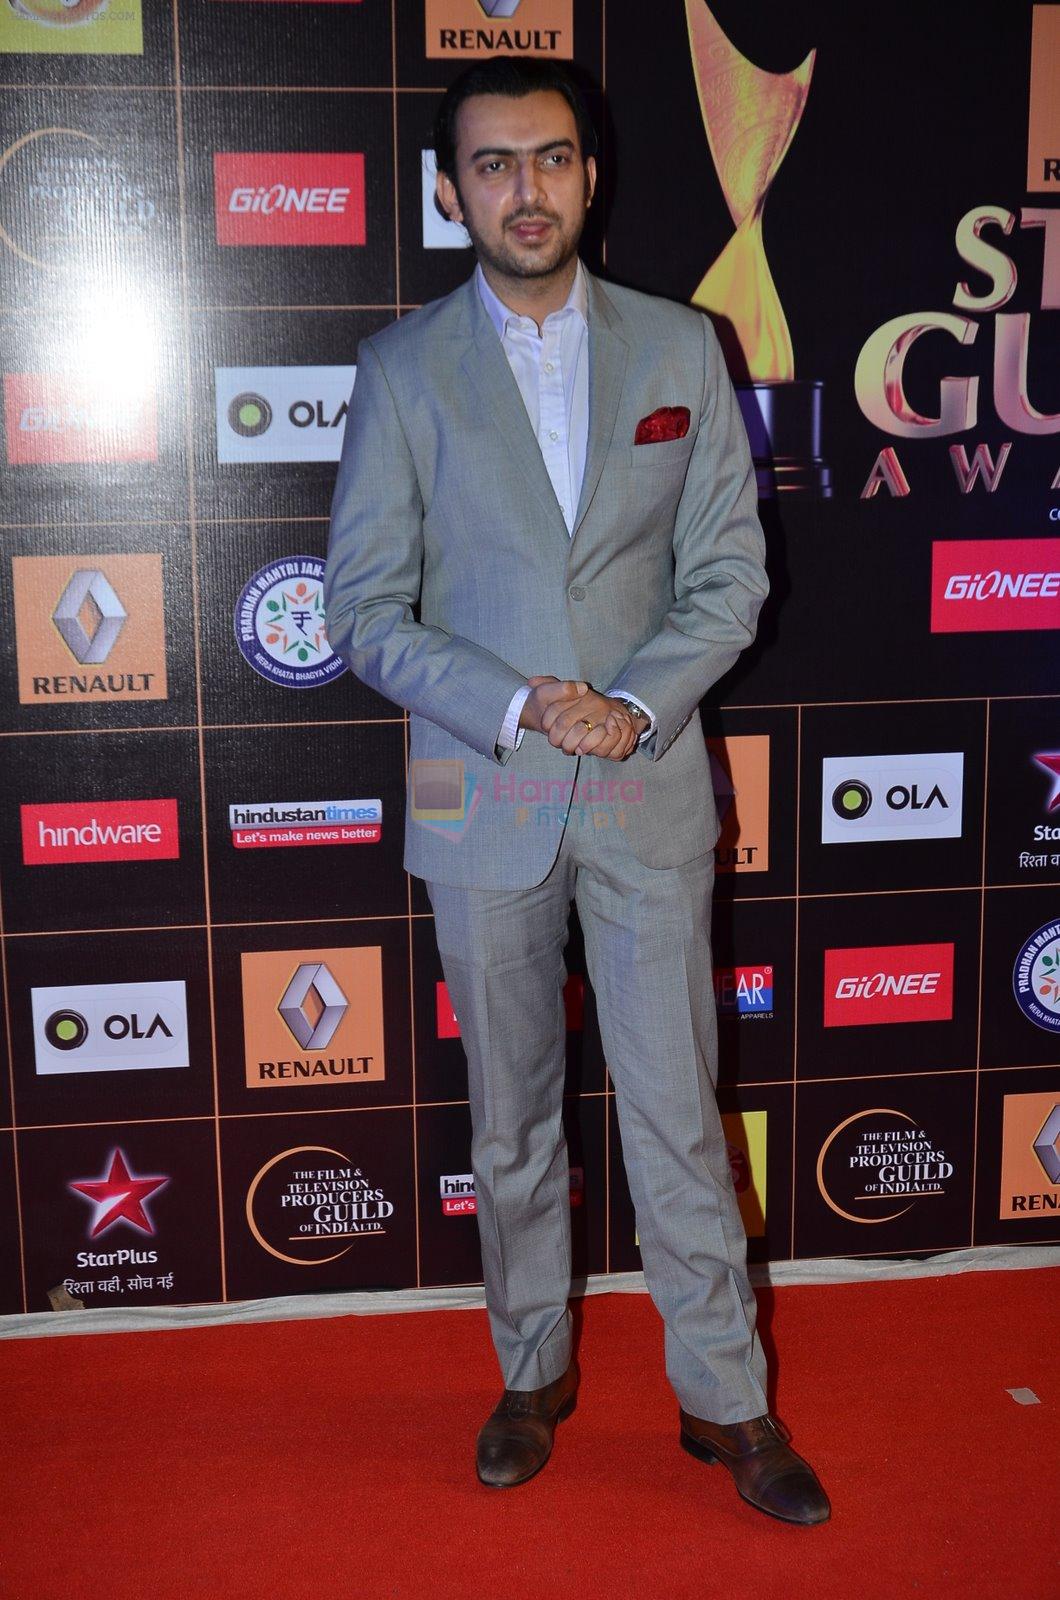 Sahil Sangha at Producers Guild Awards 2015 in Mumbai on 11th Jan 2015